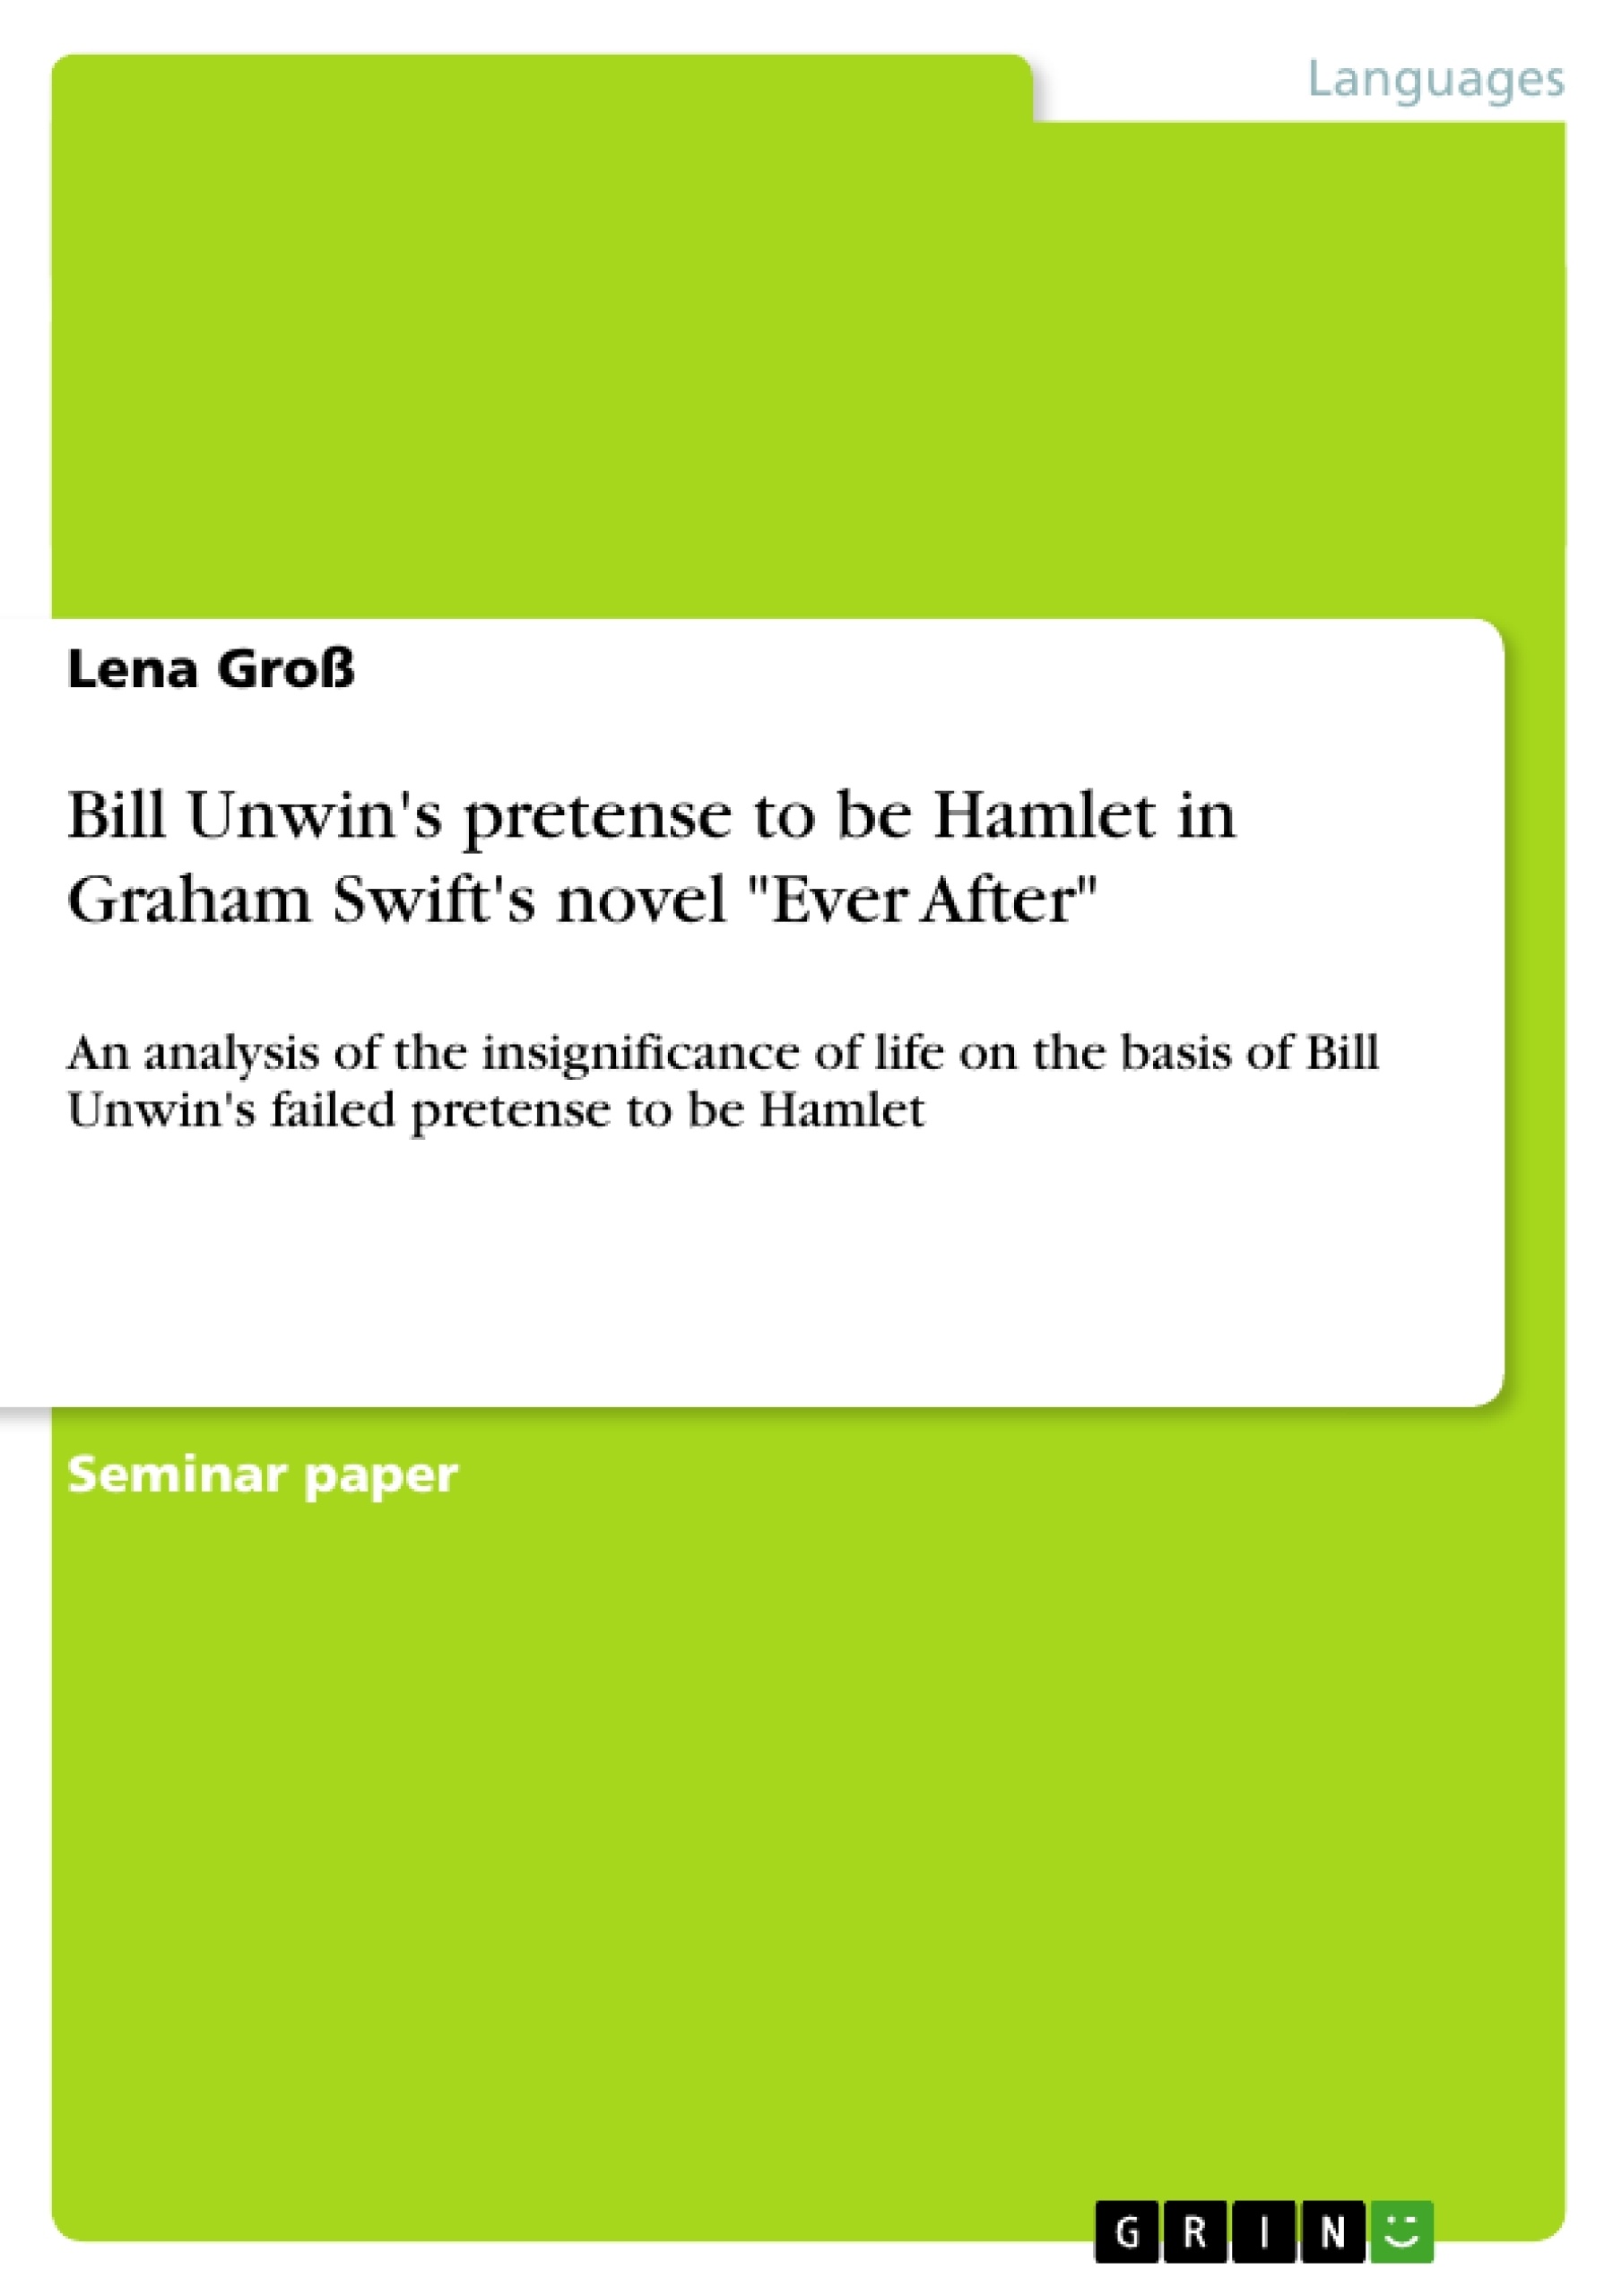 Titre: Bill Unwin's pretense to be Hamlet in Graham Swift's novel "Ever After"